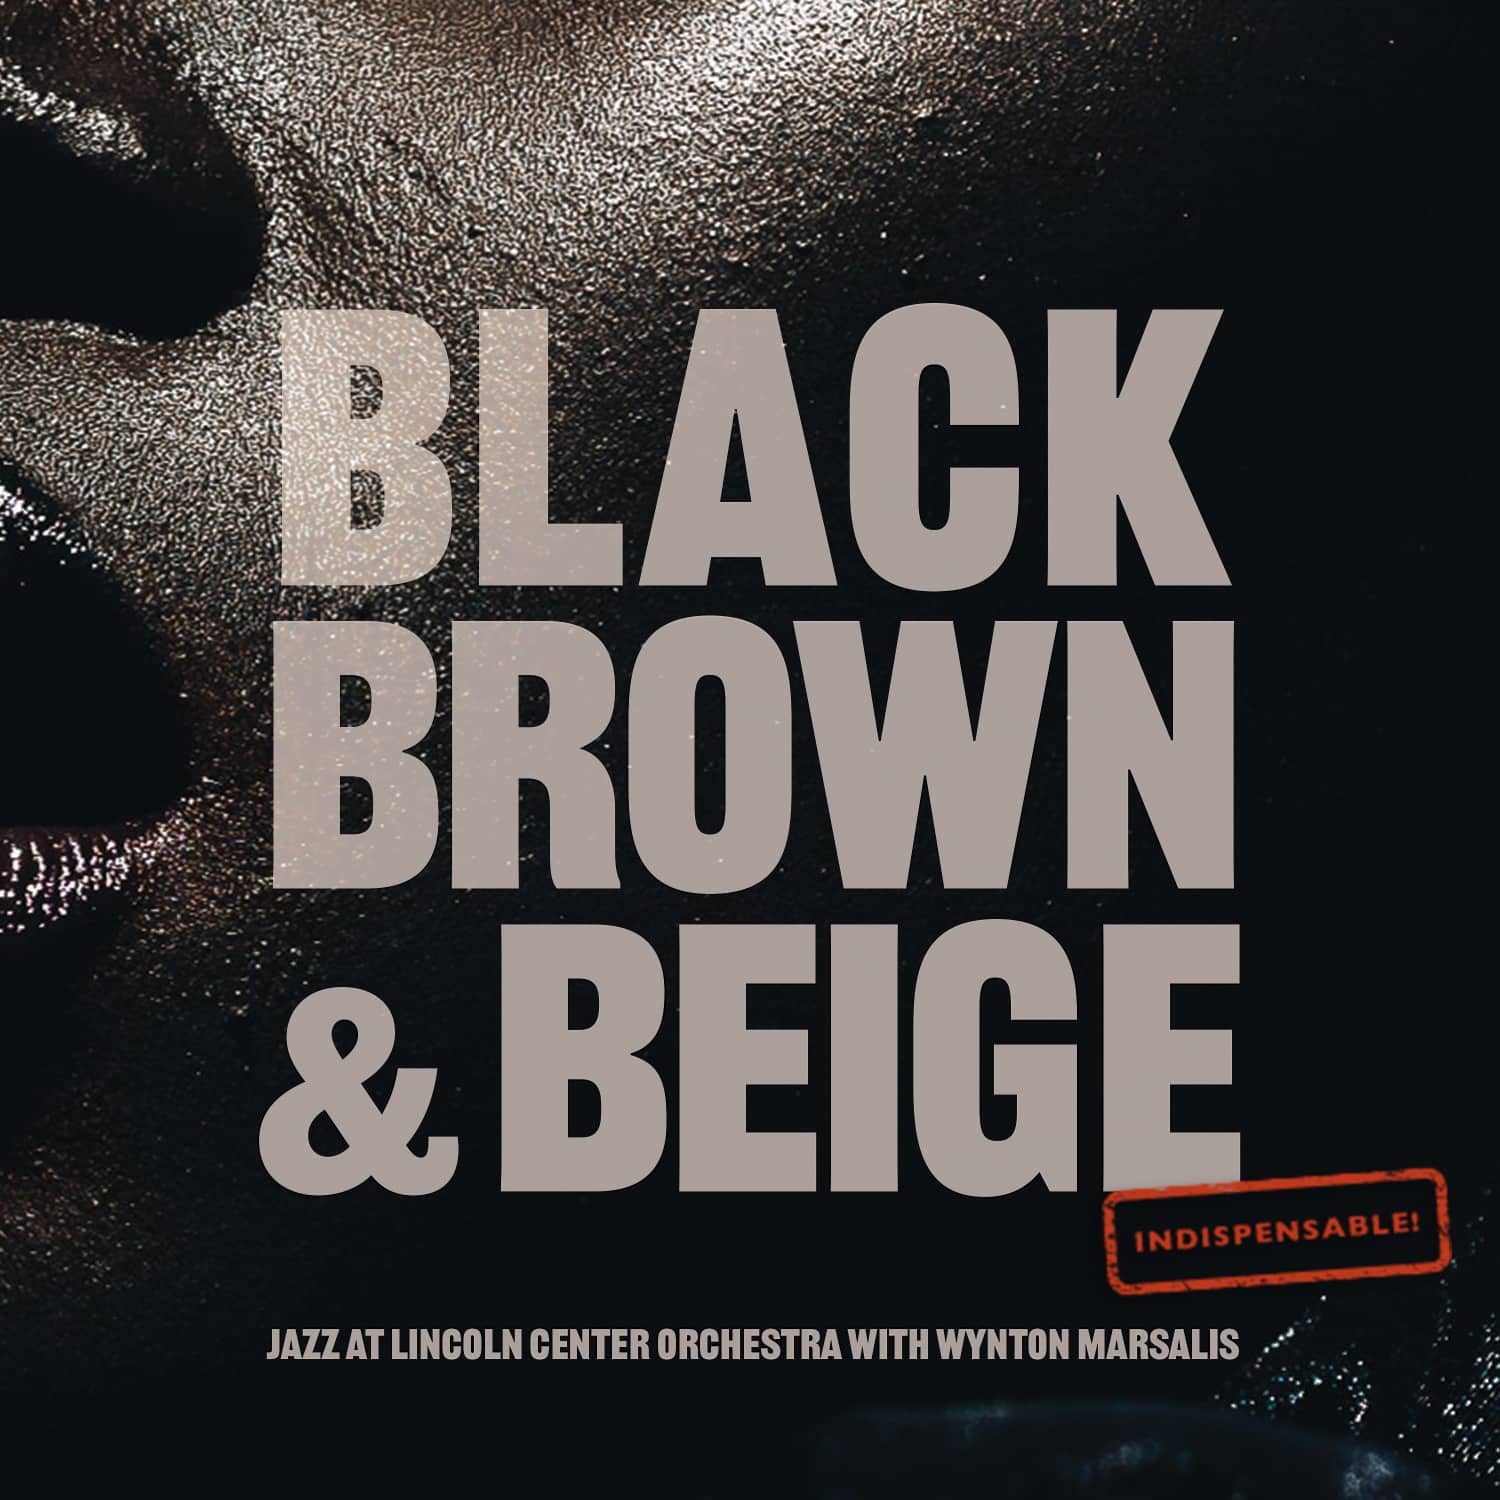 Jazz at Lincoln Center Orchestra with Wynton Marsalis - Black, Brown & Beige